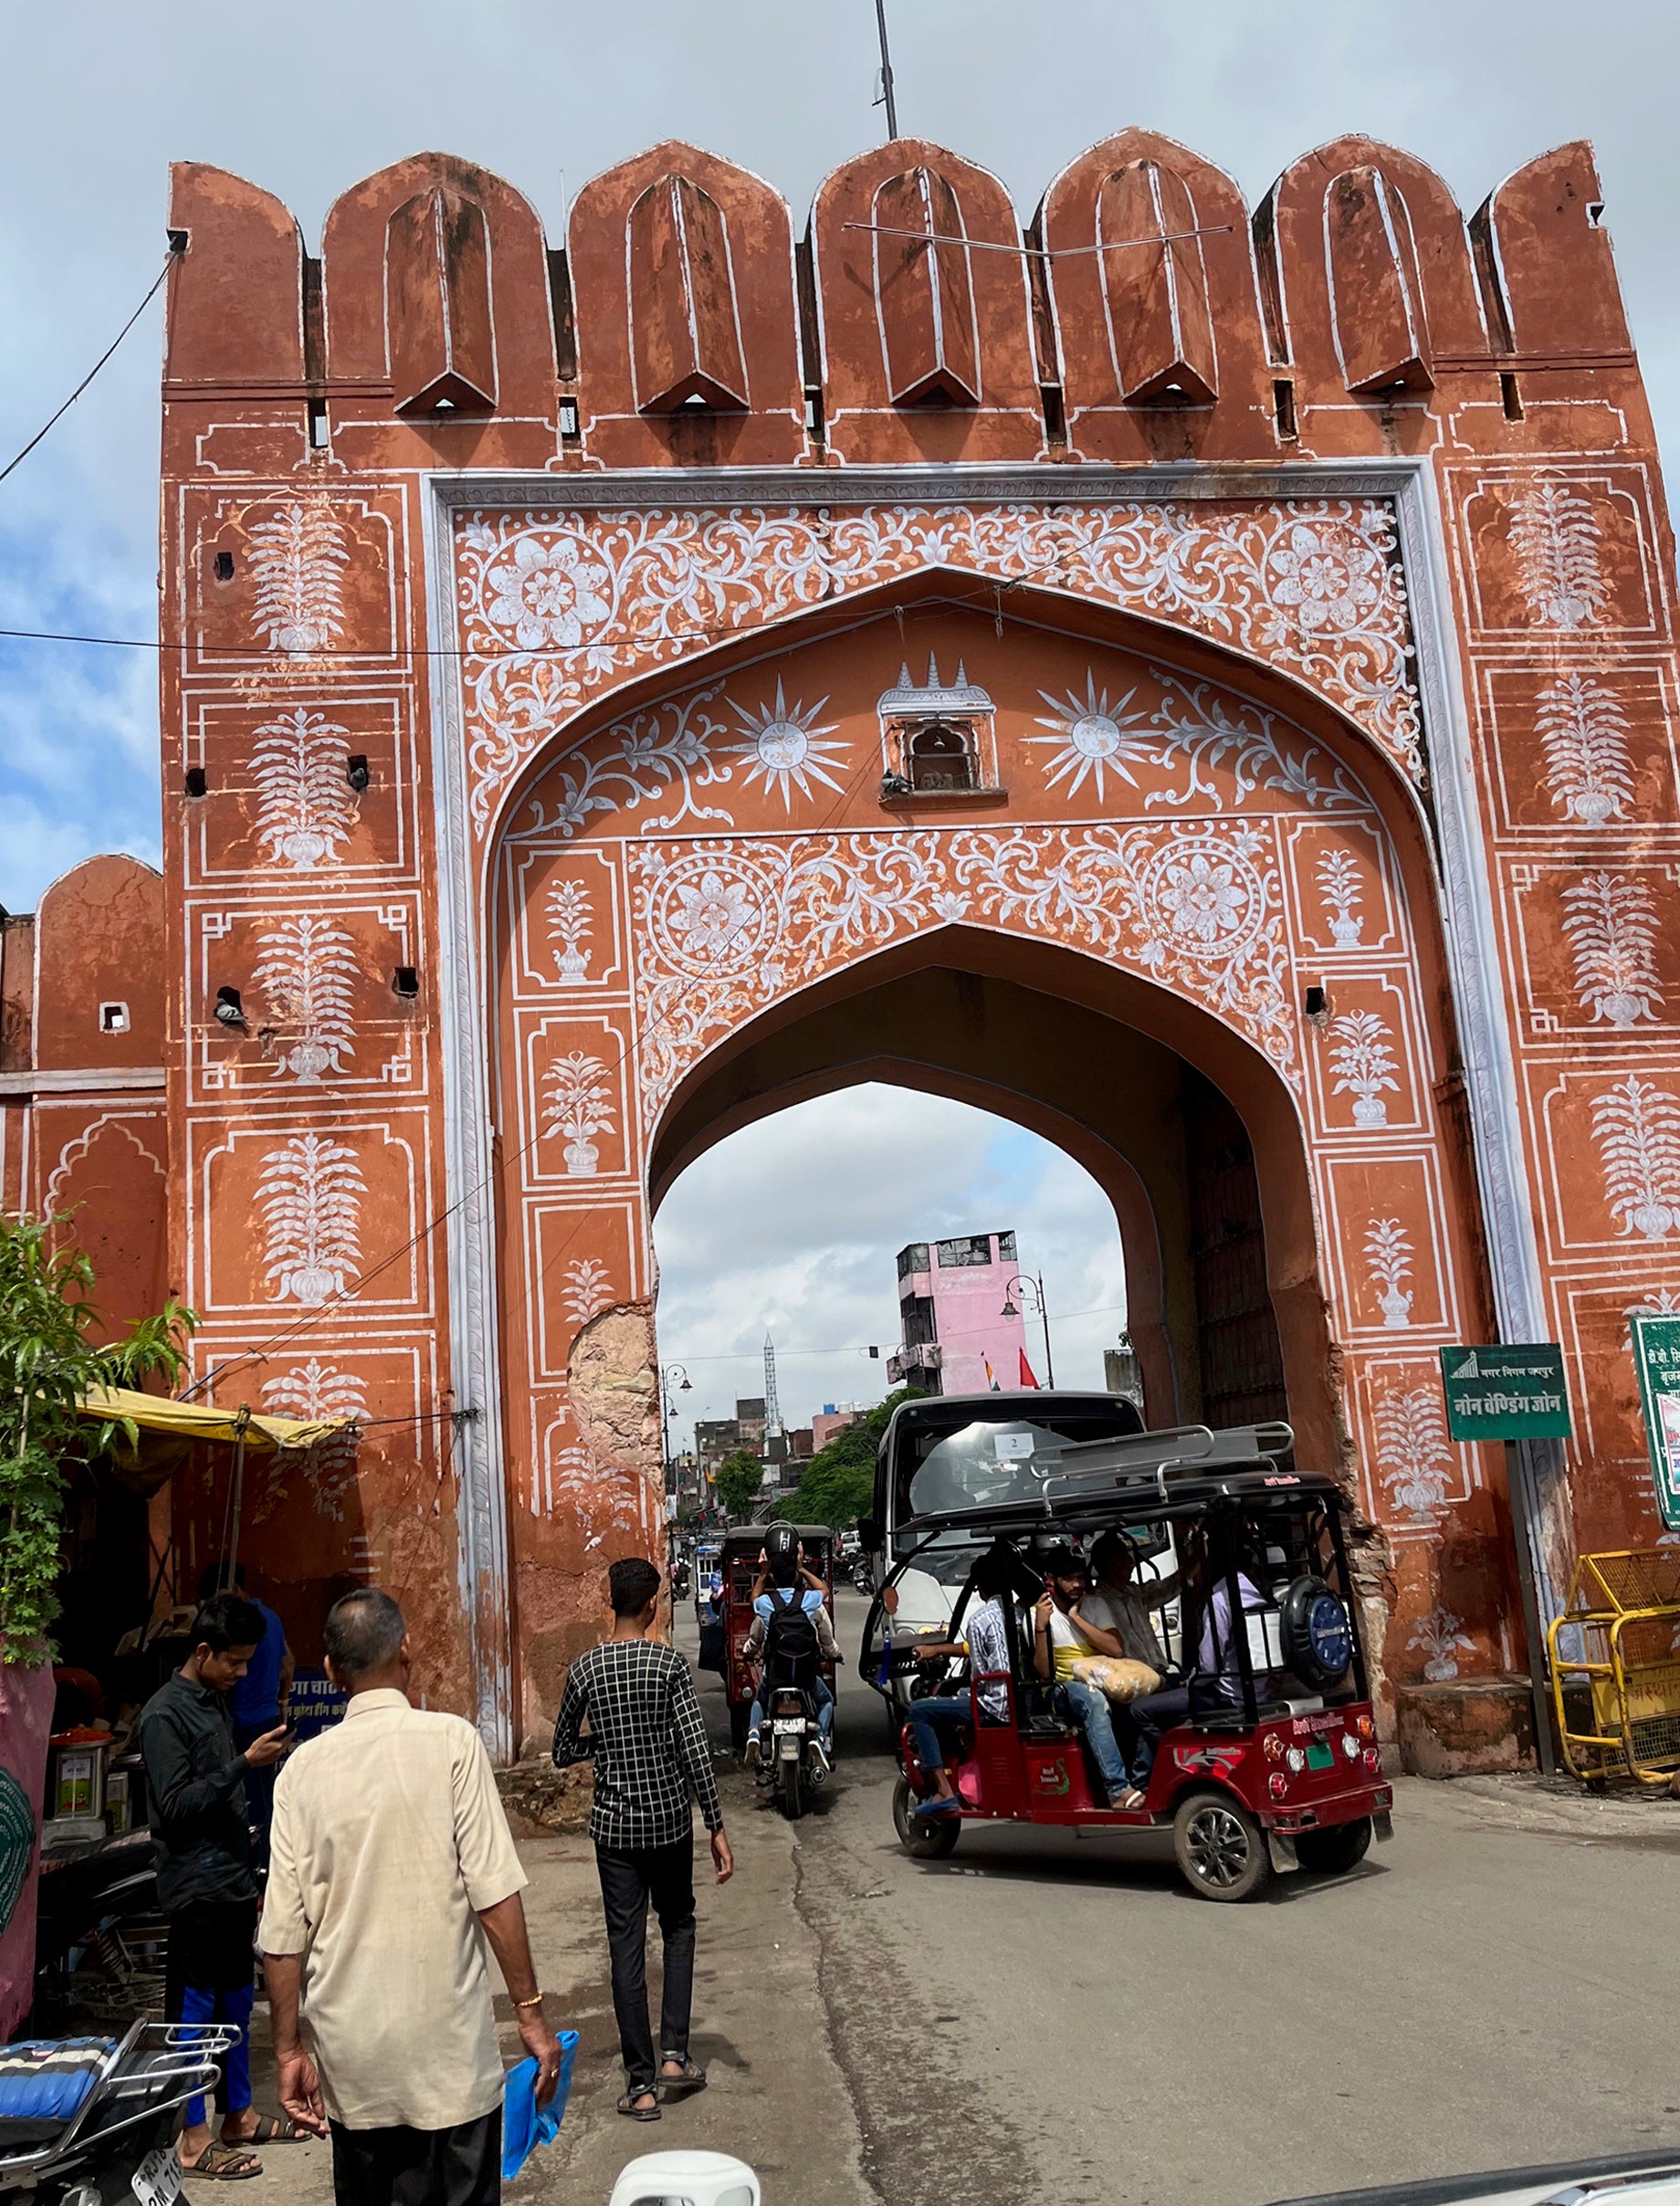 Enter Jaipur old city